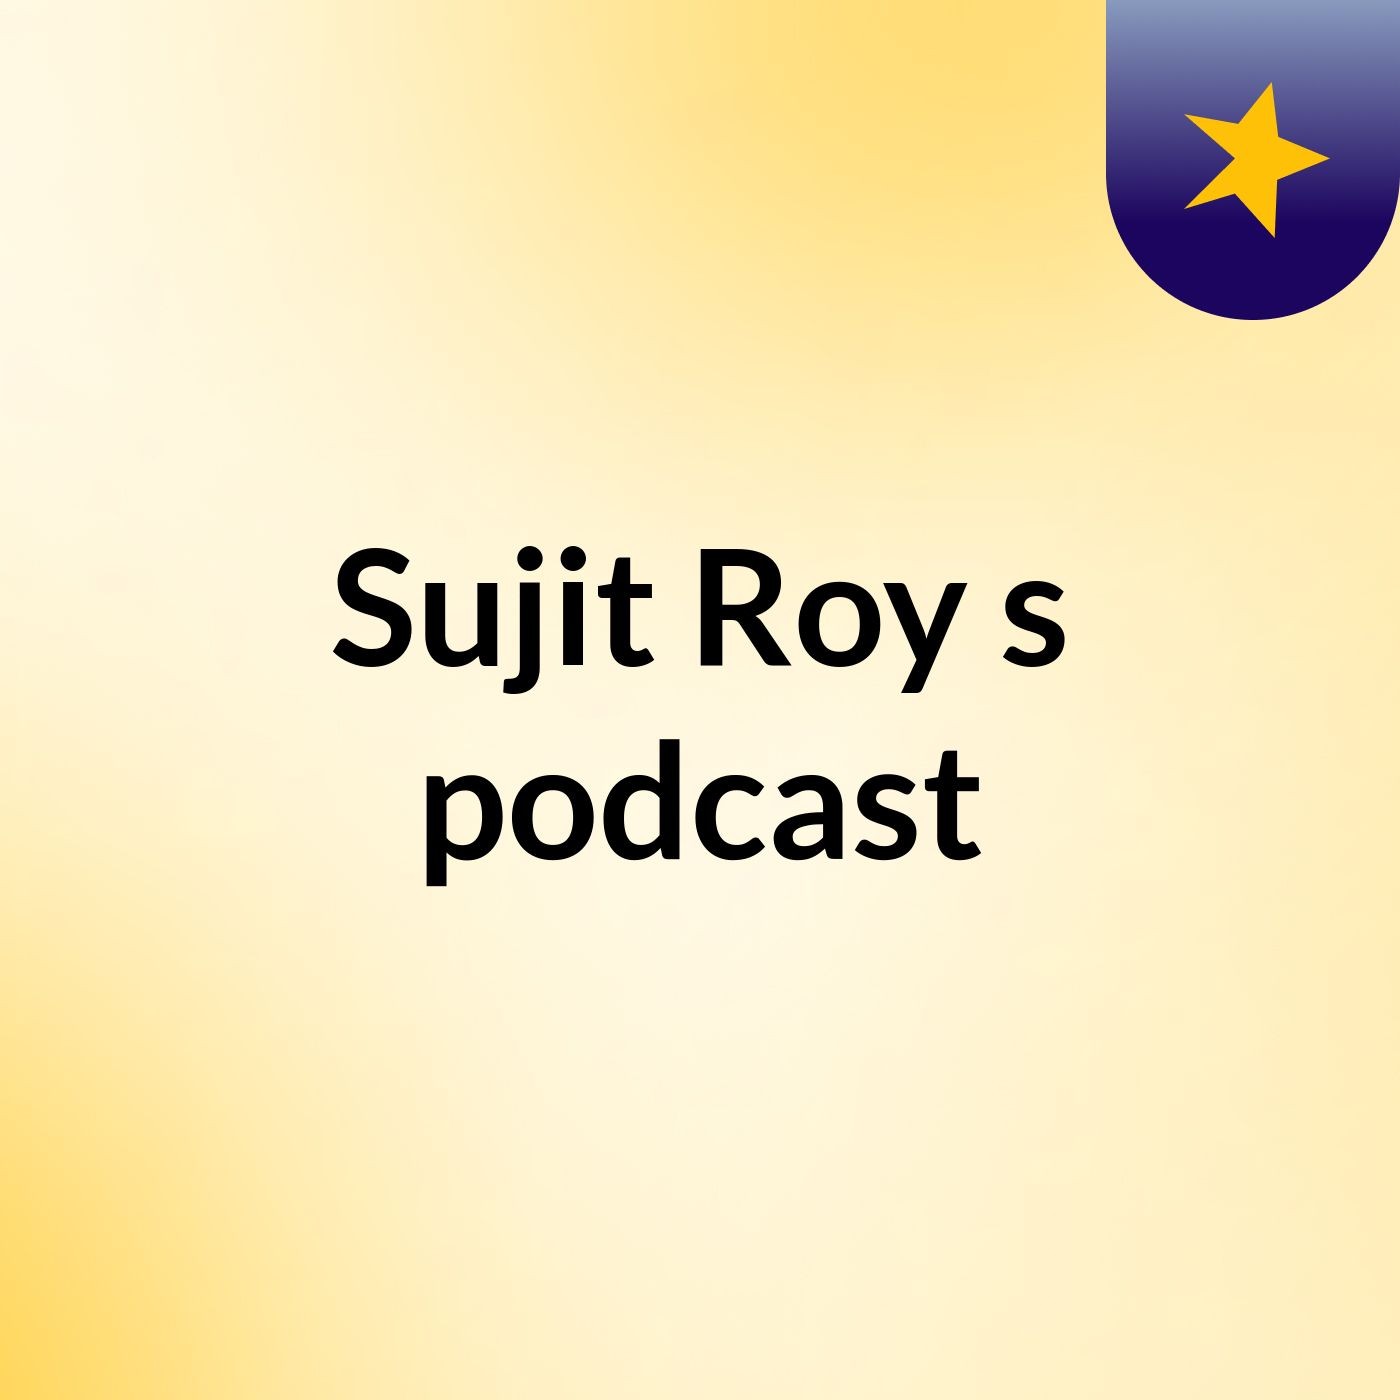 Sujit Roy's podcast